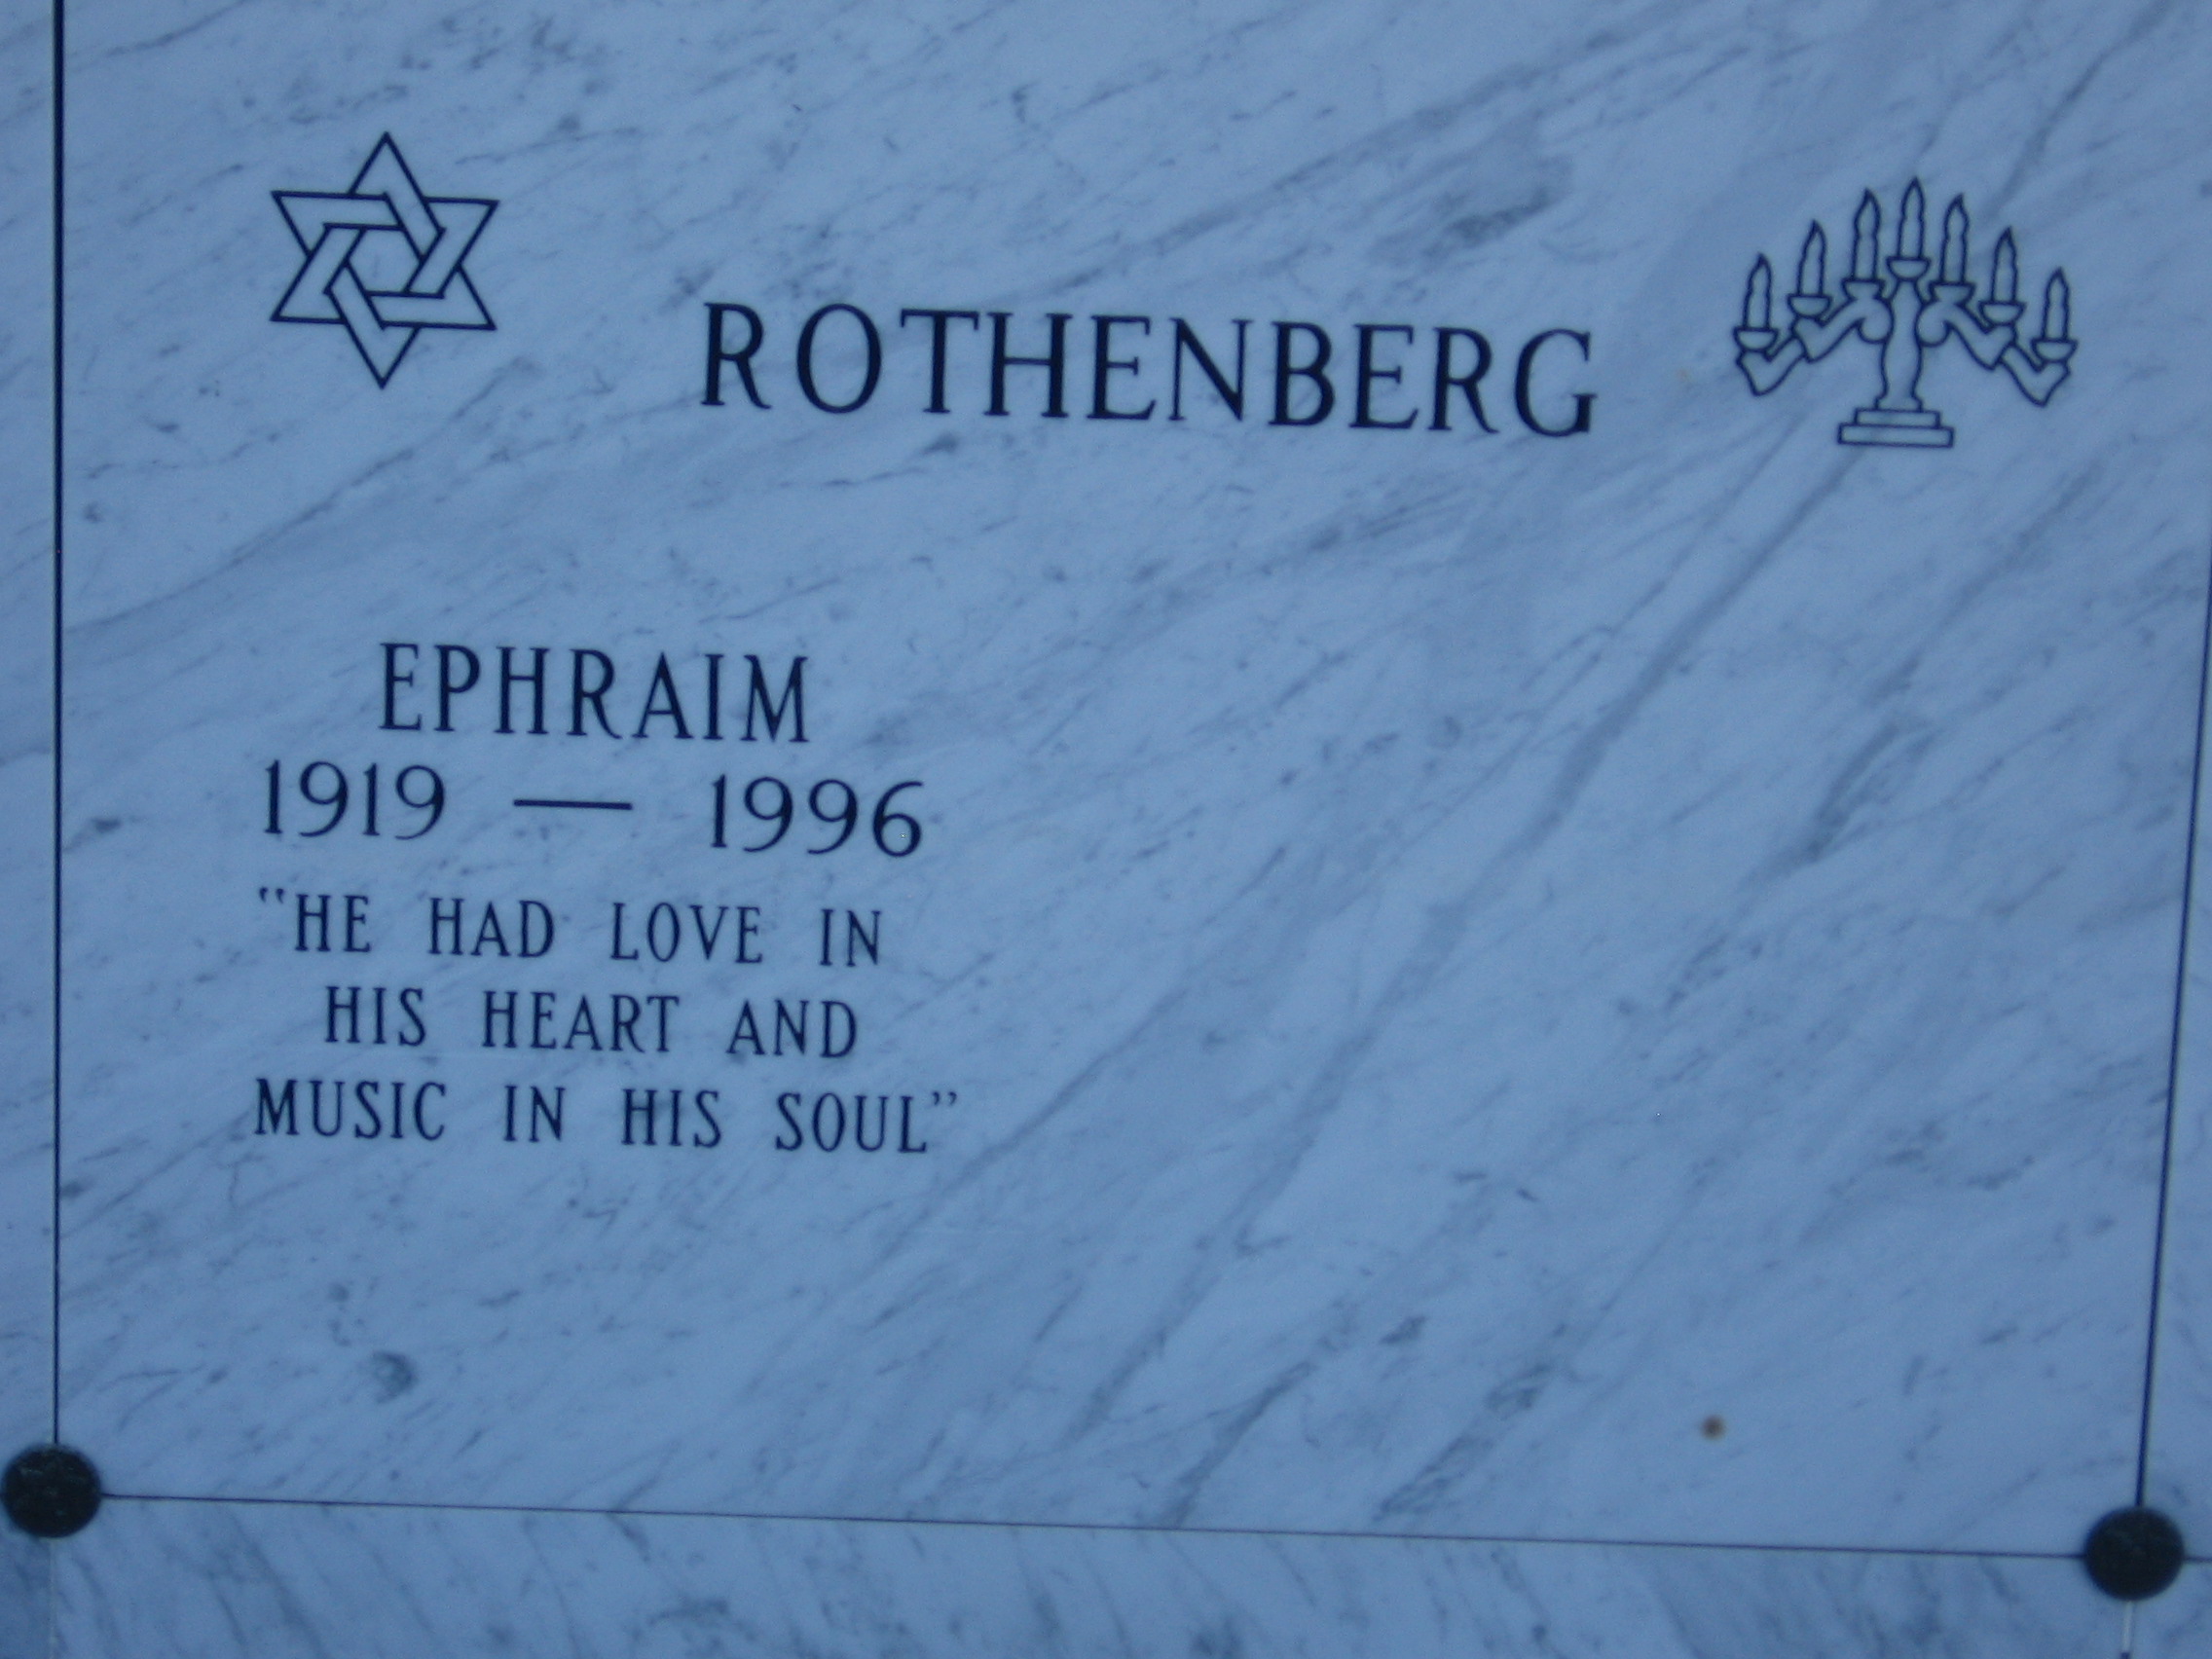 Ephraim Rothenberg